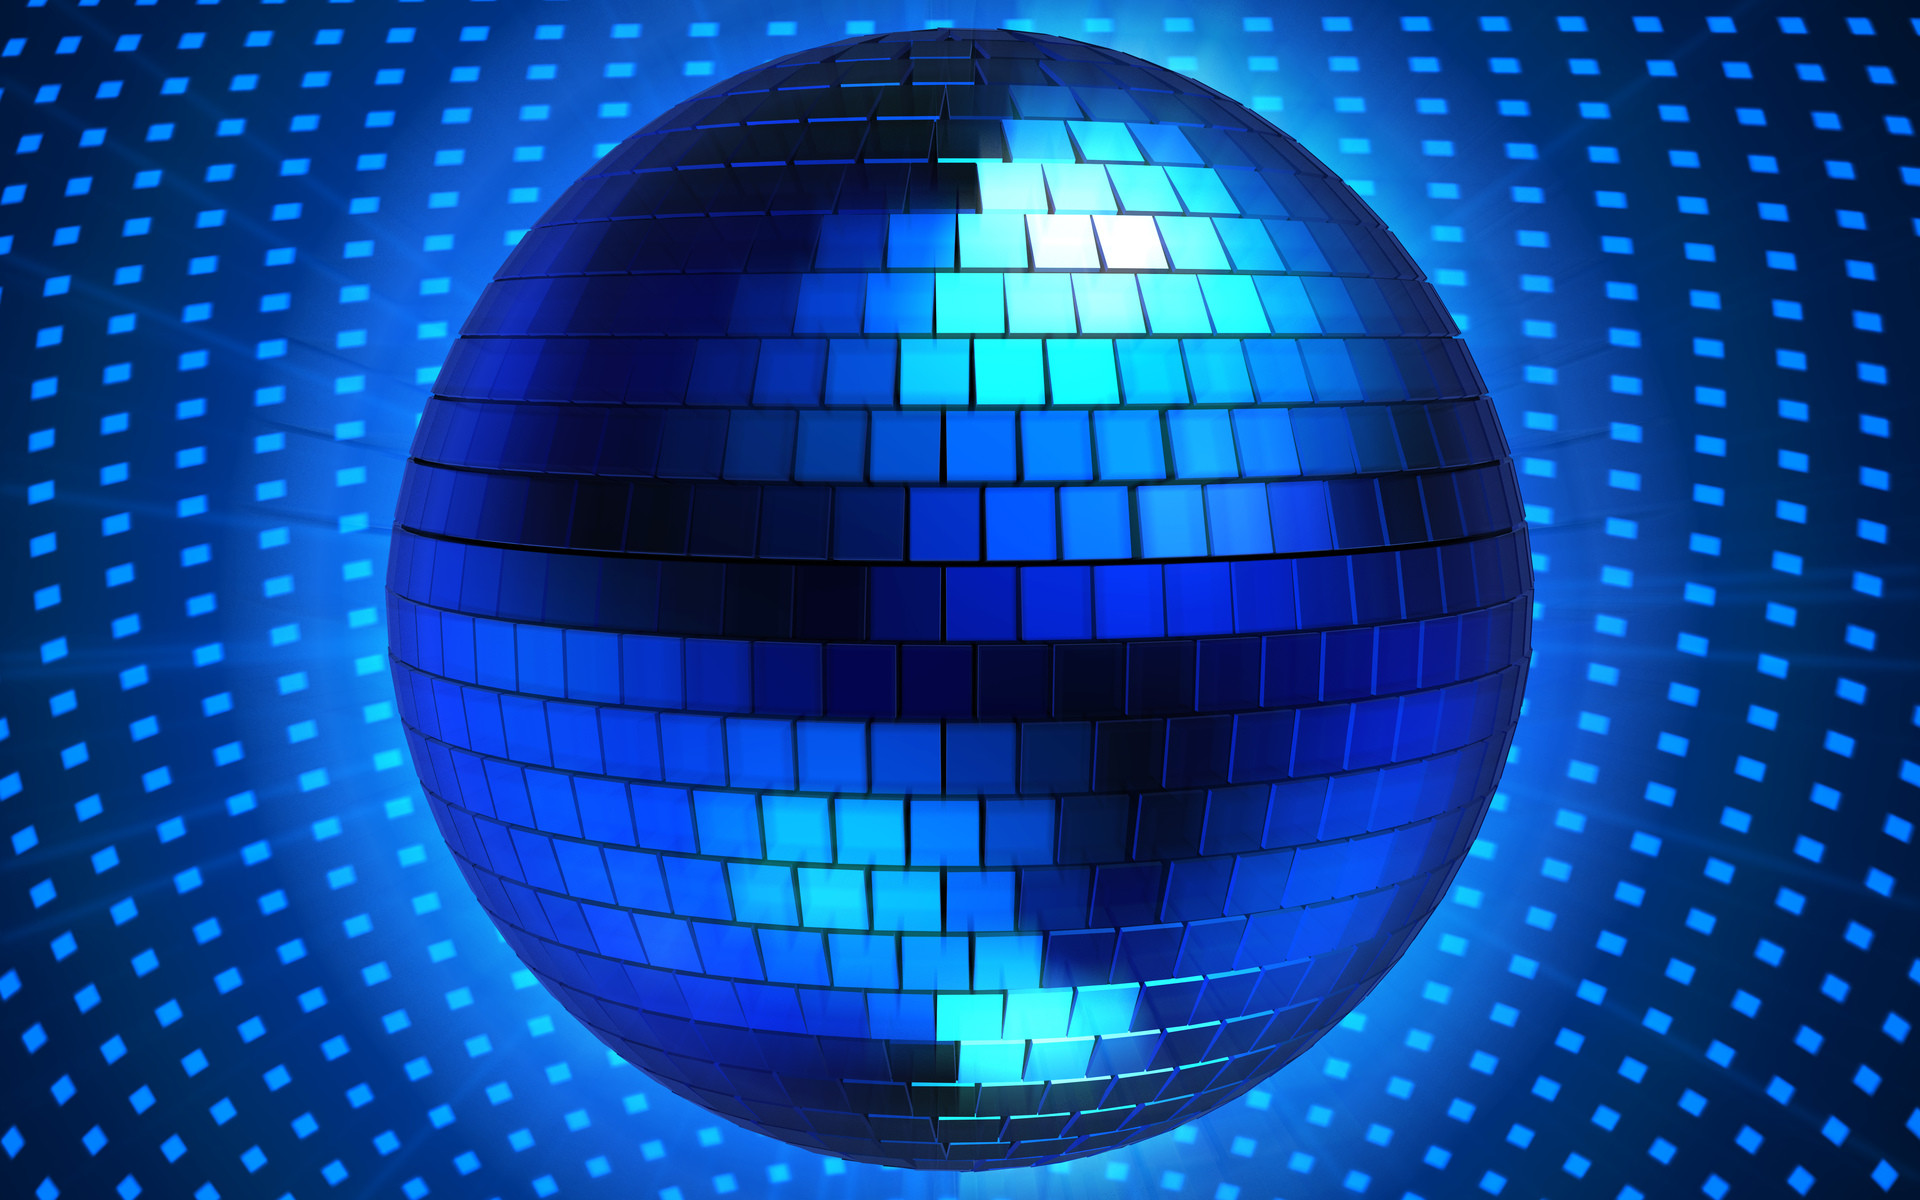 bola de papel tapiz,azul,disco,esfera,música,azul eléctrico